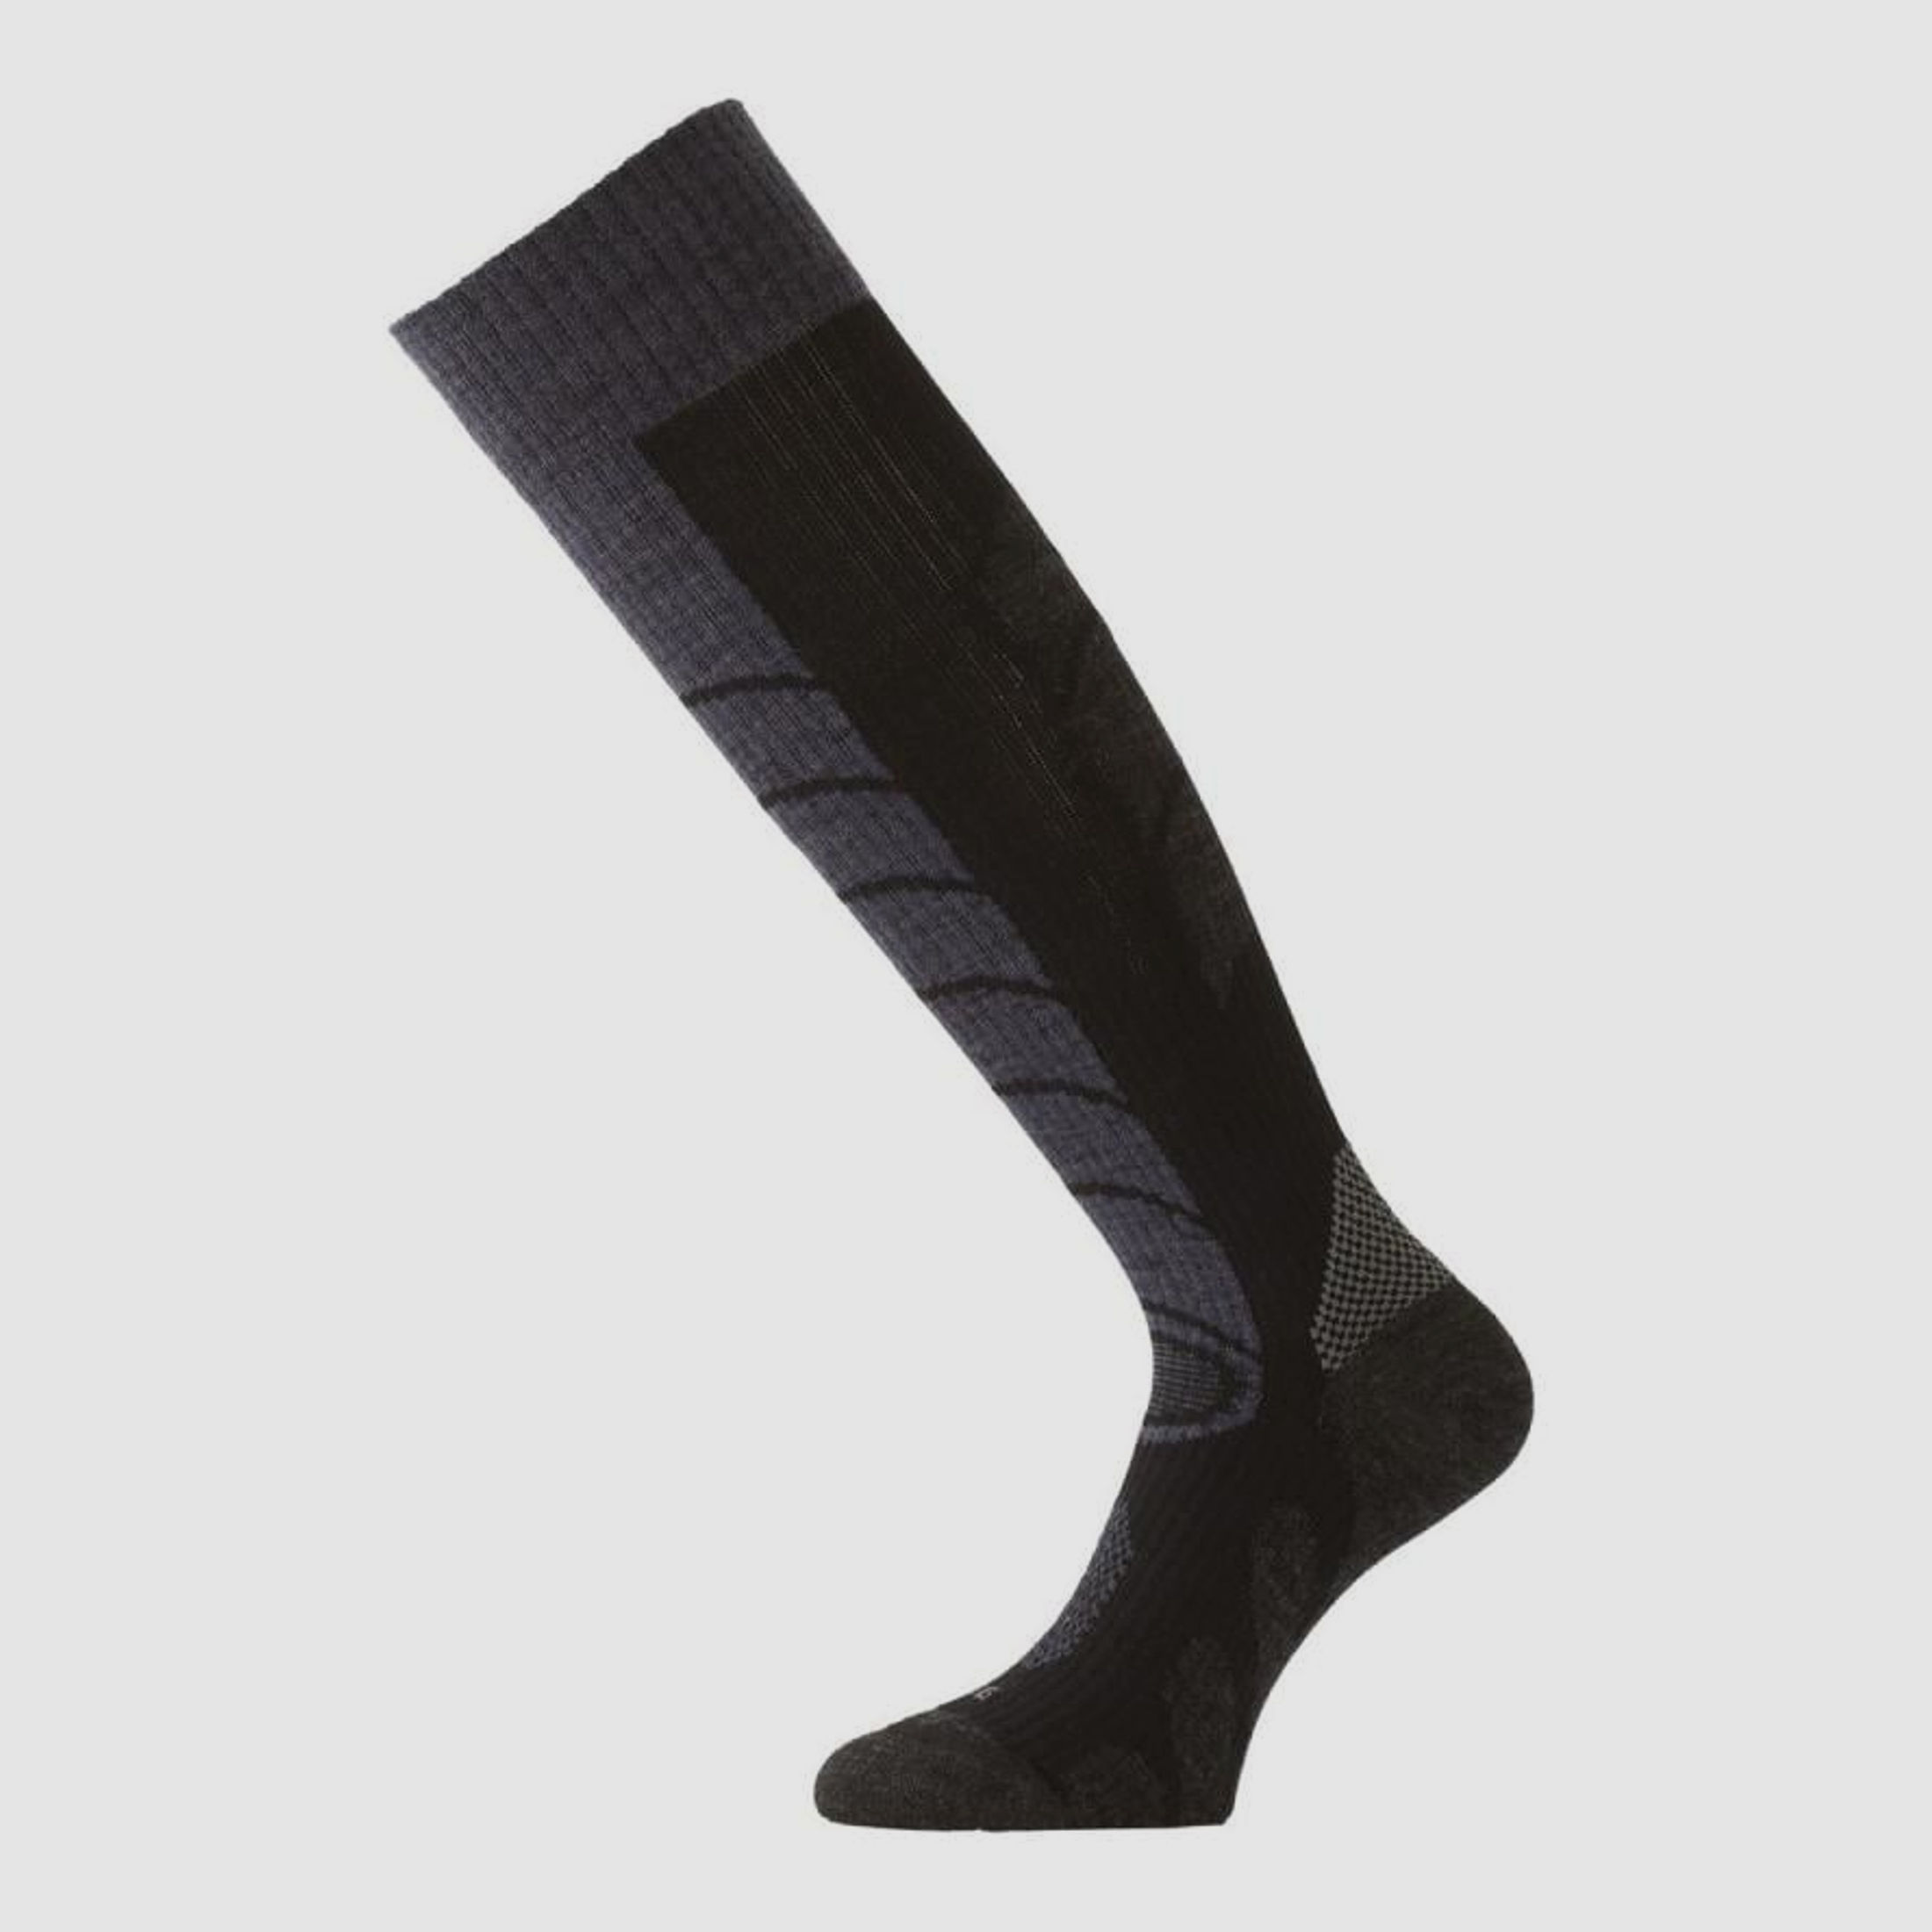 Lasting SWE Merino SKI-Socken Schwarz/dunkelgrau    XL (EU 46-49)